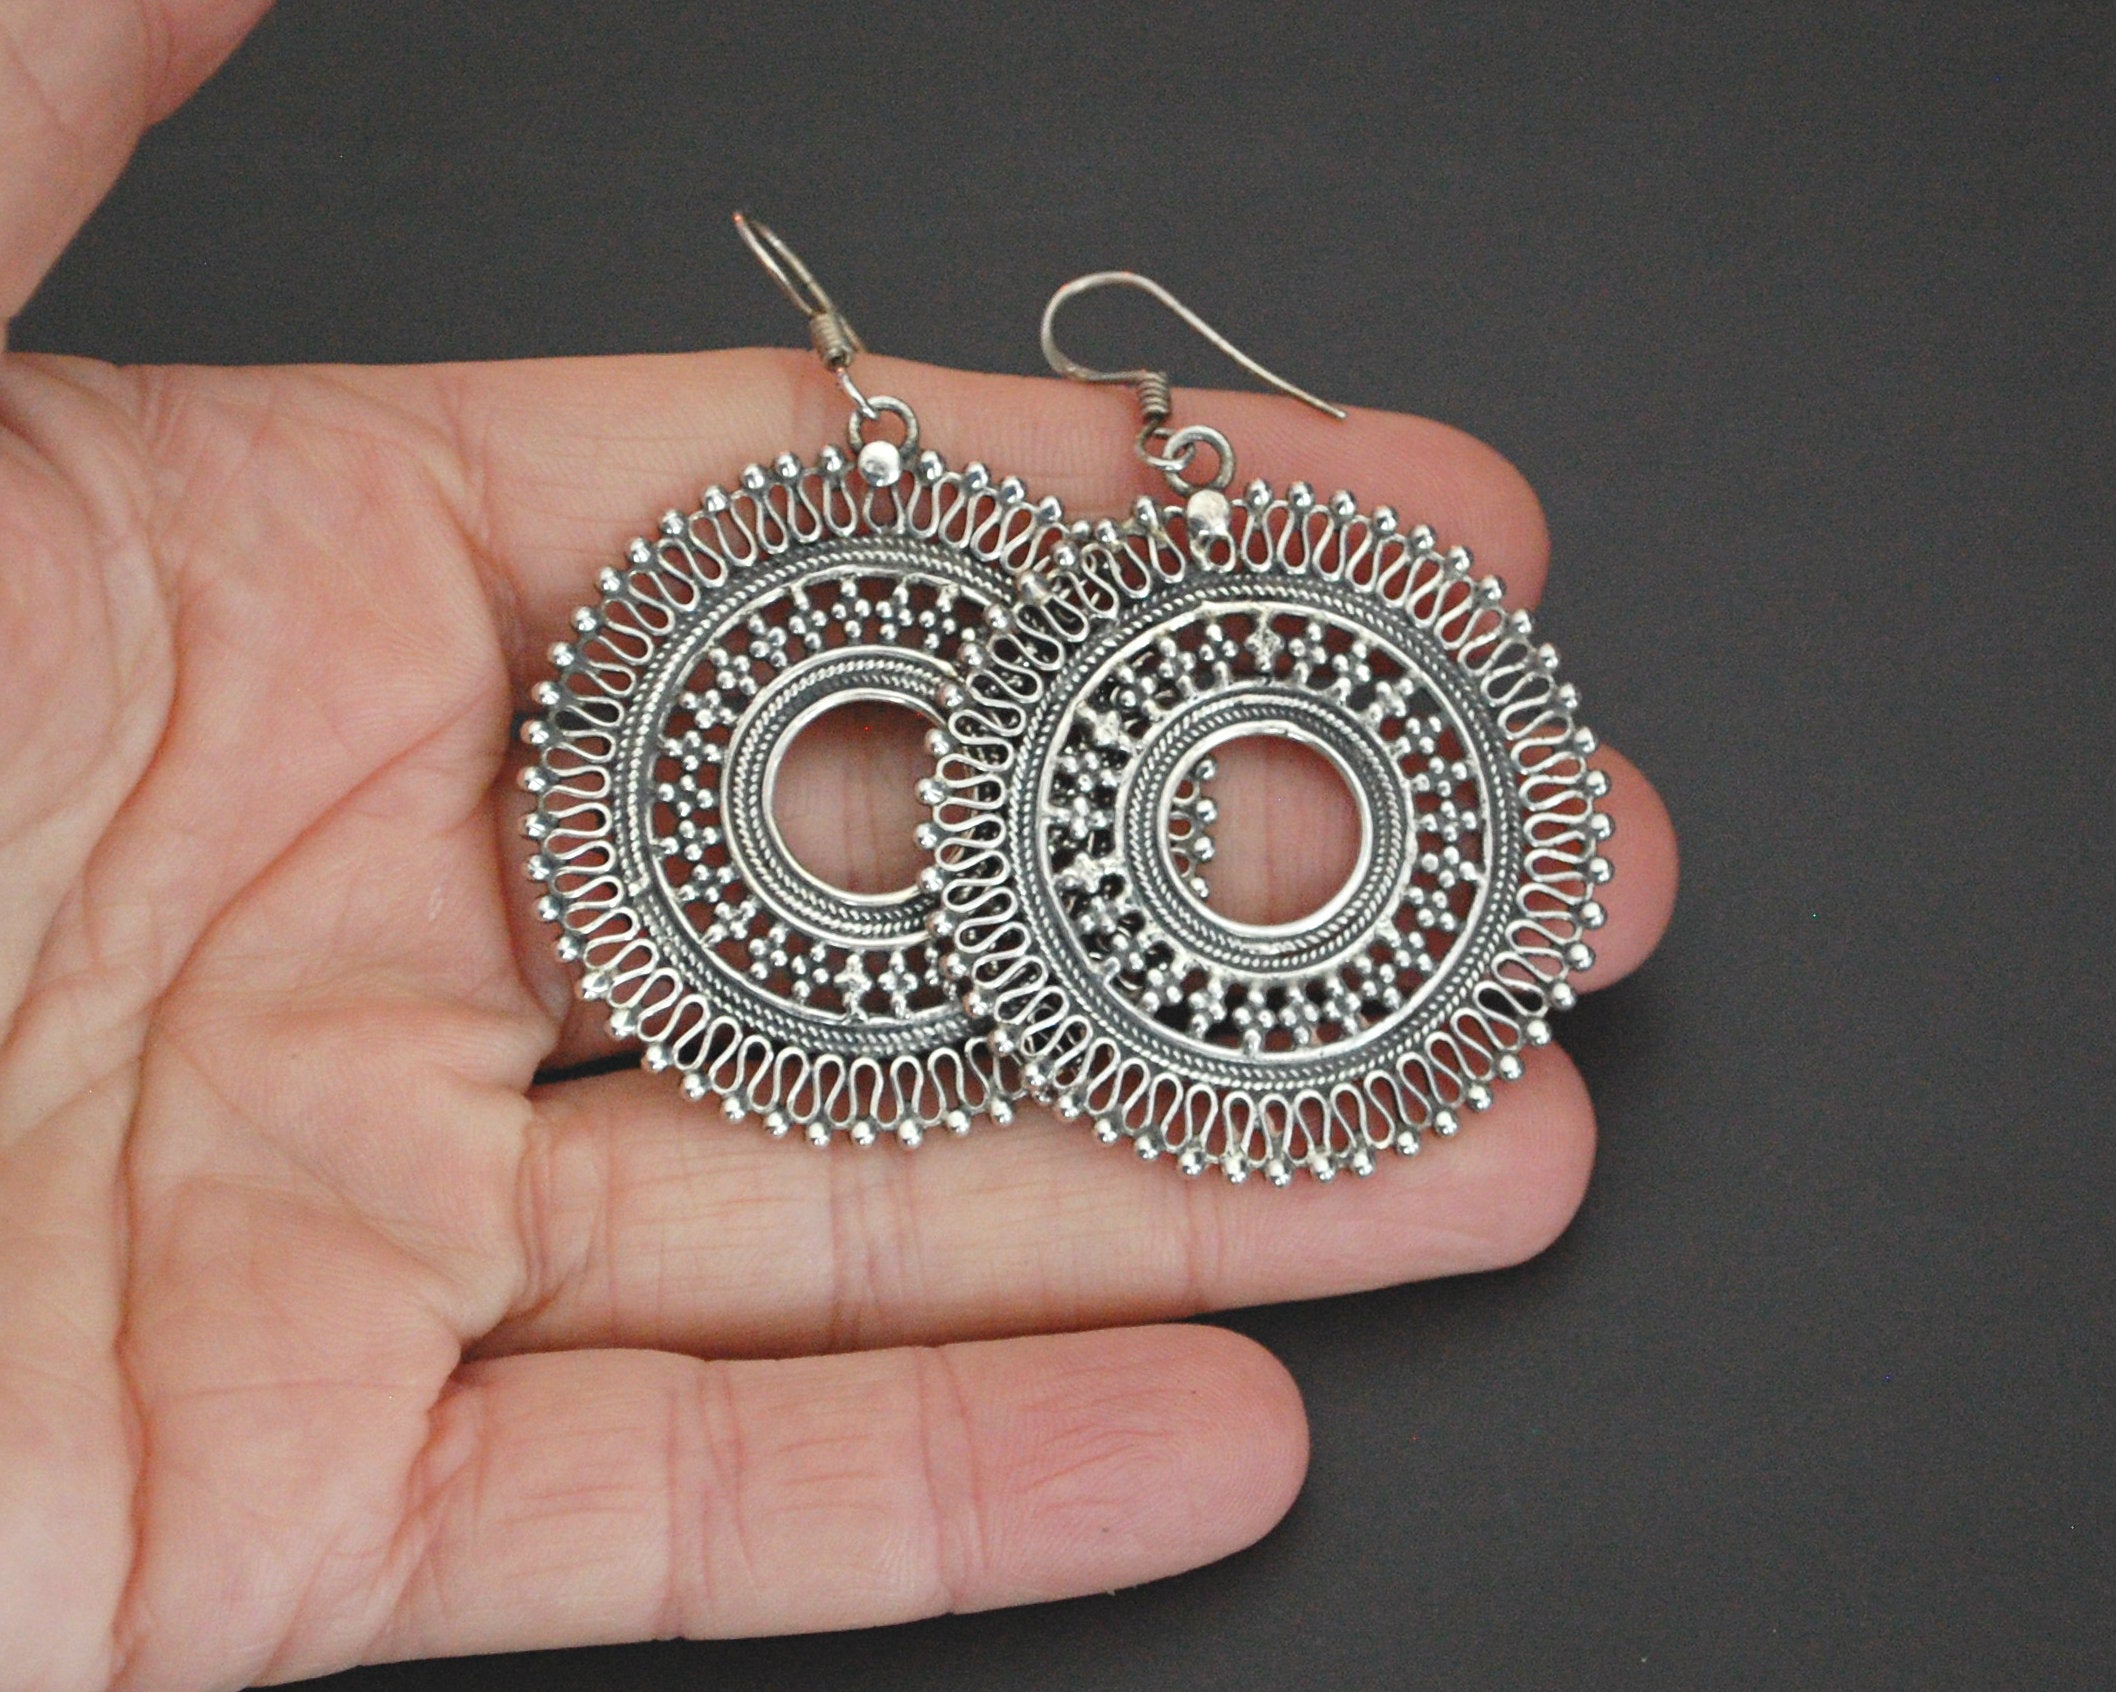 Indian Sterling Silver Mandala Earrings